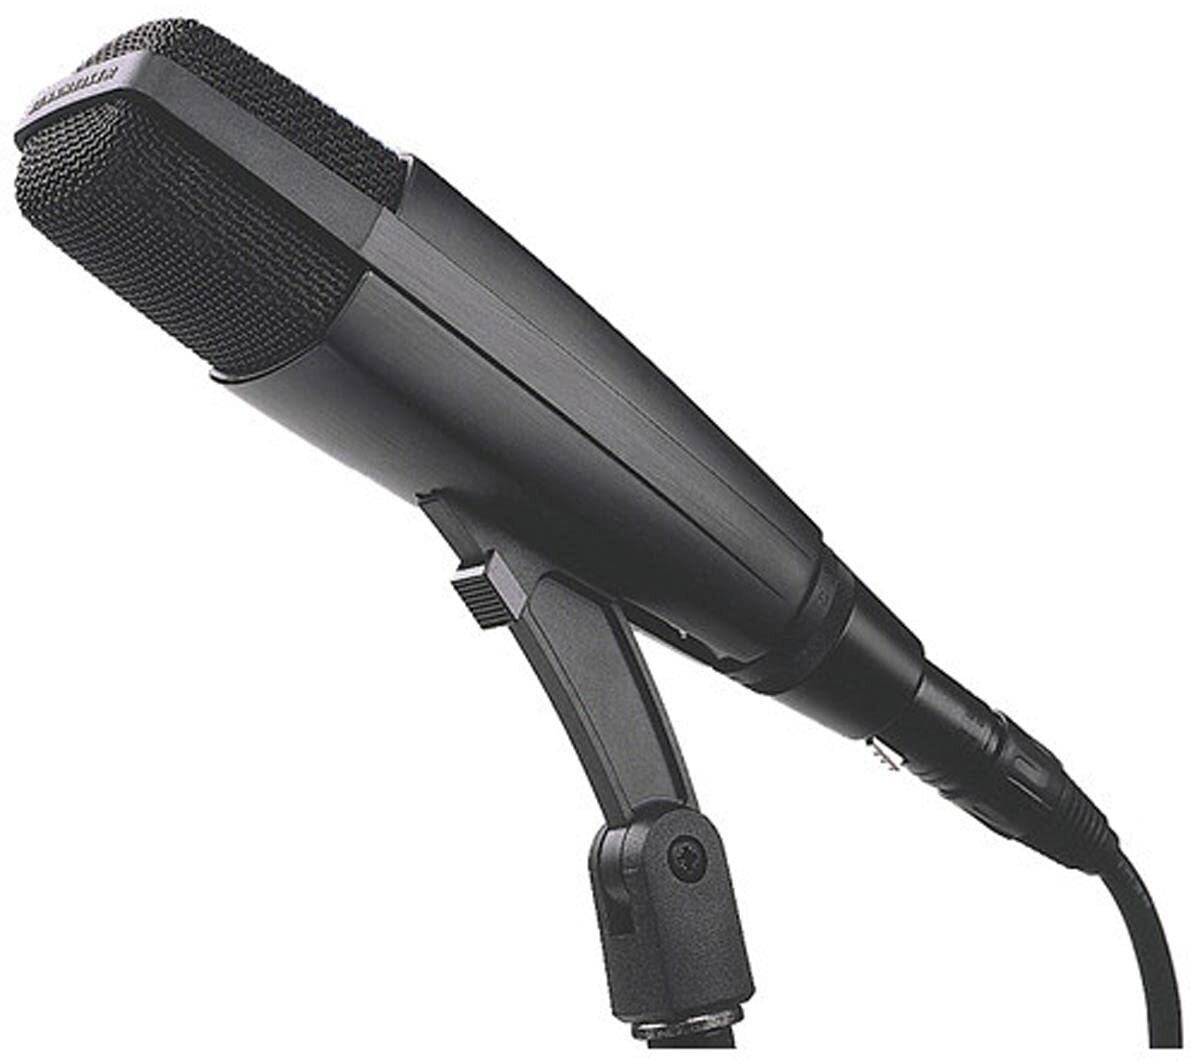 Sennheiser MD 421-II Dynamic Studio Microphone zoom image